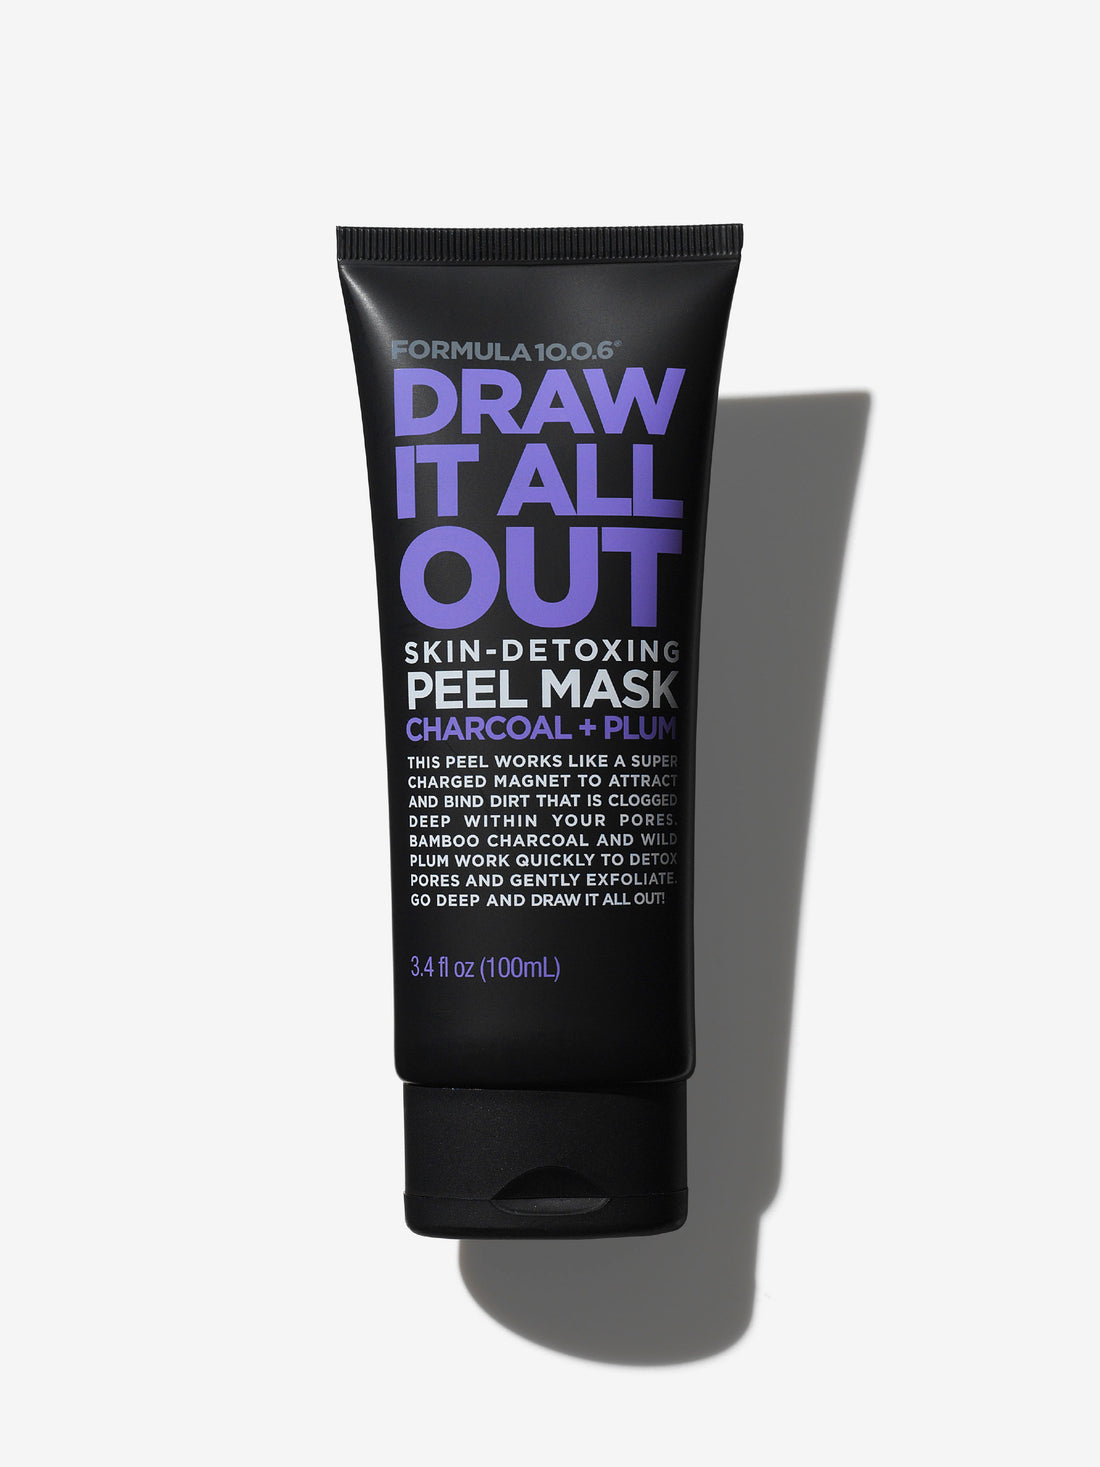 Draw It All Out Skin Detoxing Peel Mask Formula 10.0.6